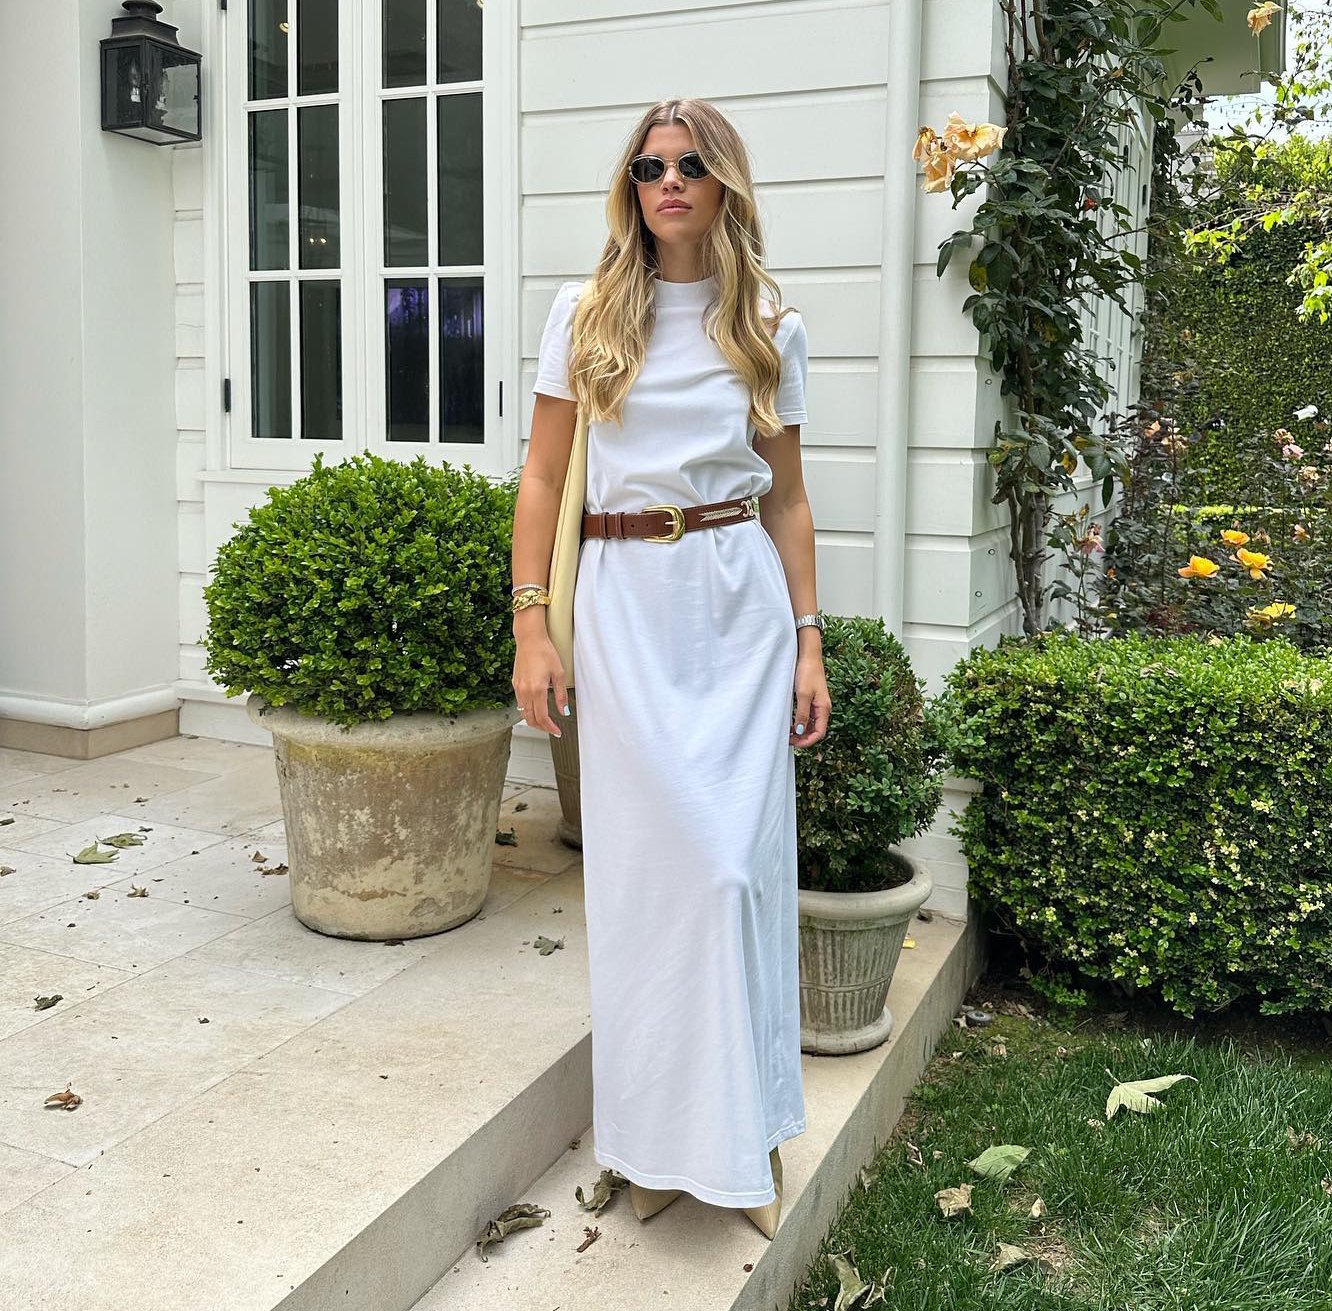 Sofia Richie - Instagram post | Chelsea DeBoer style